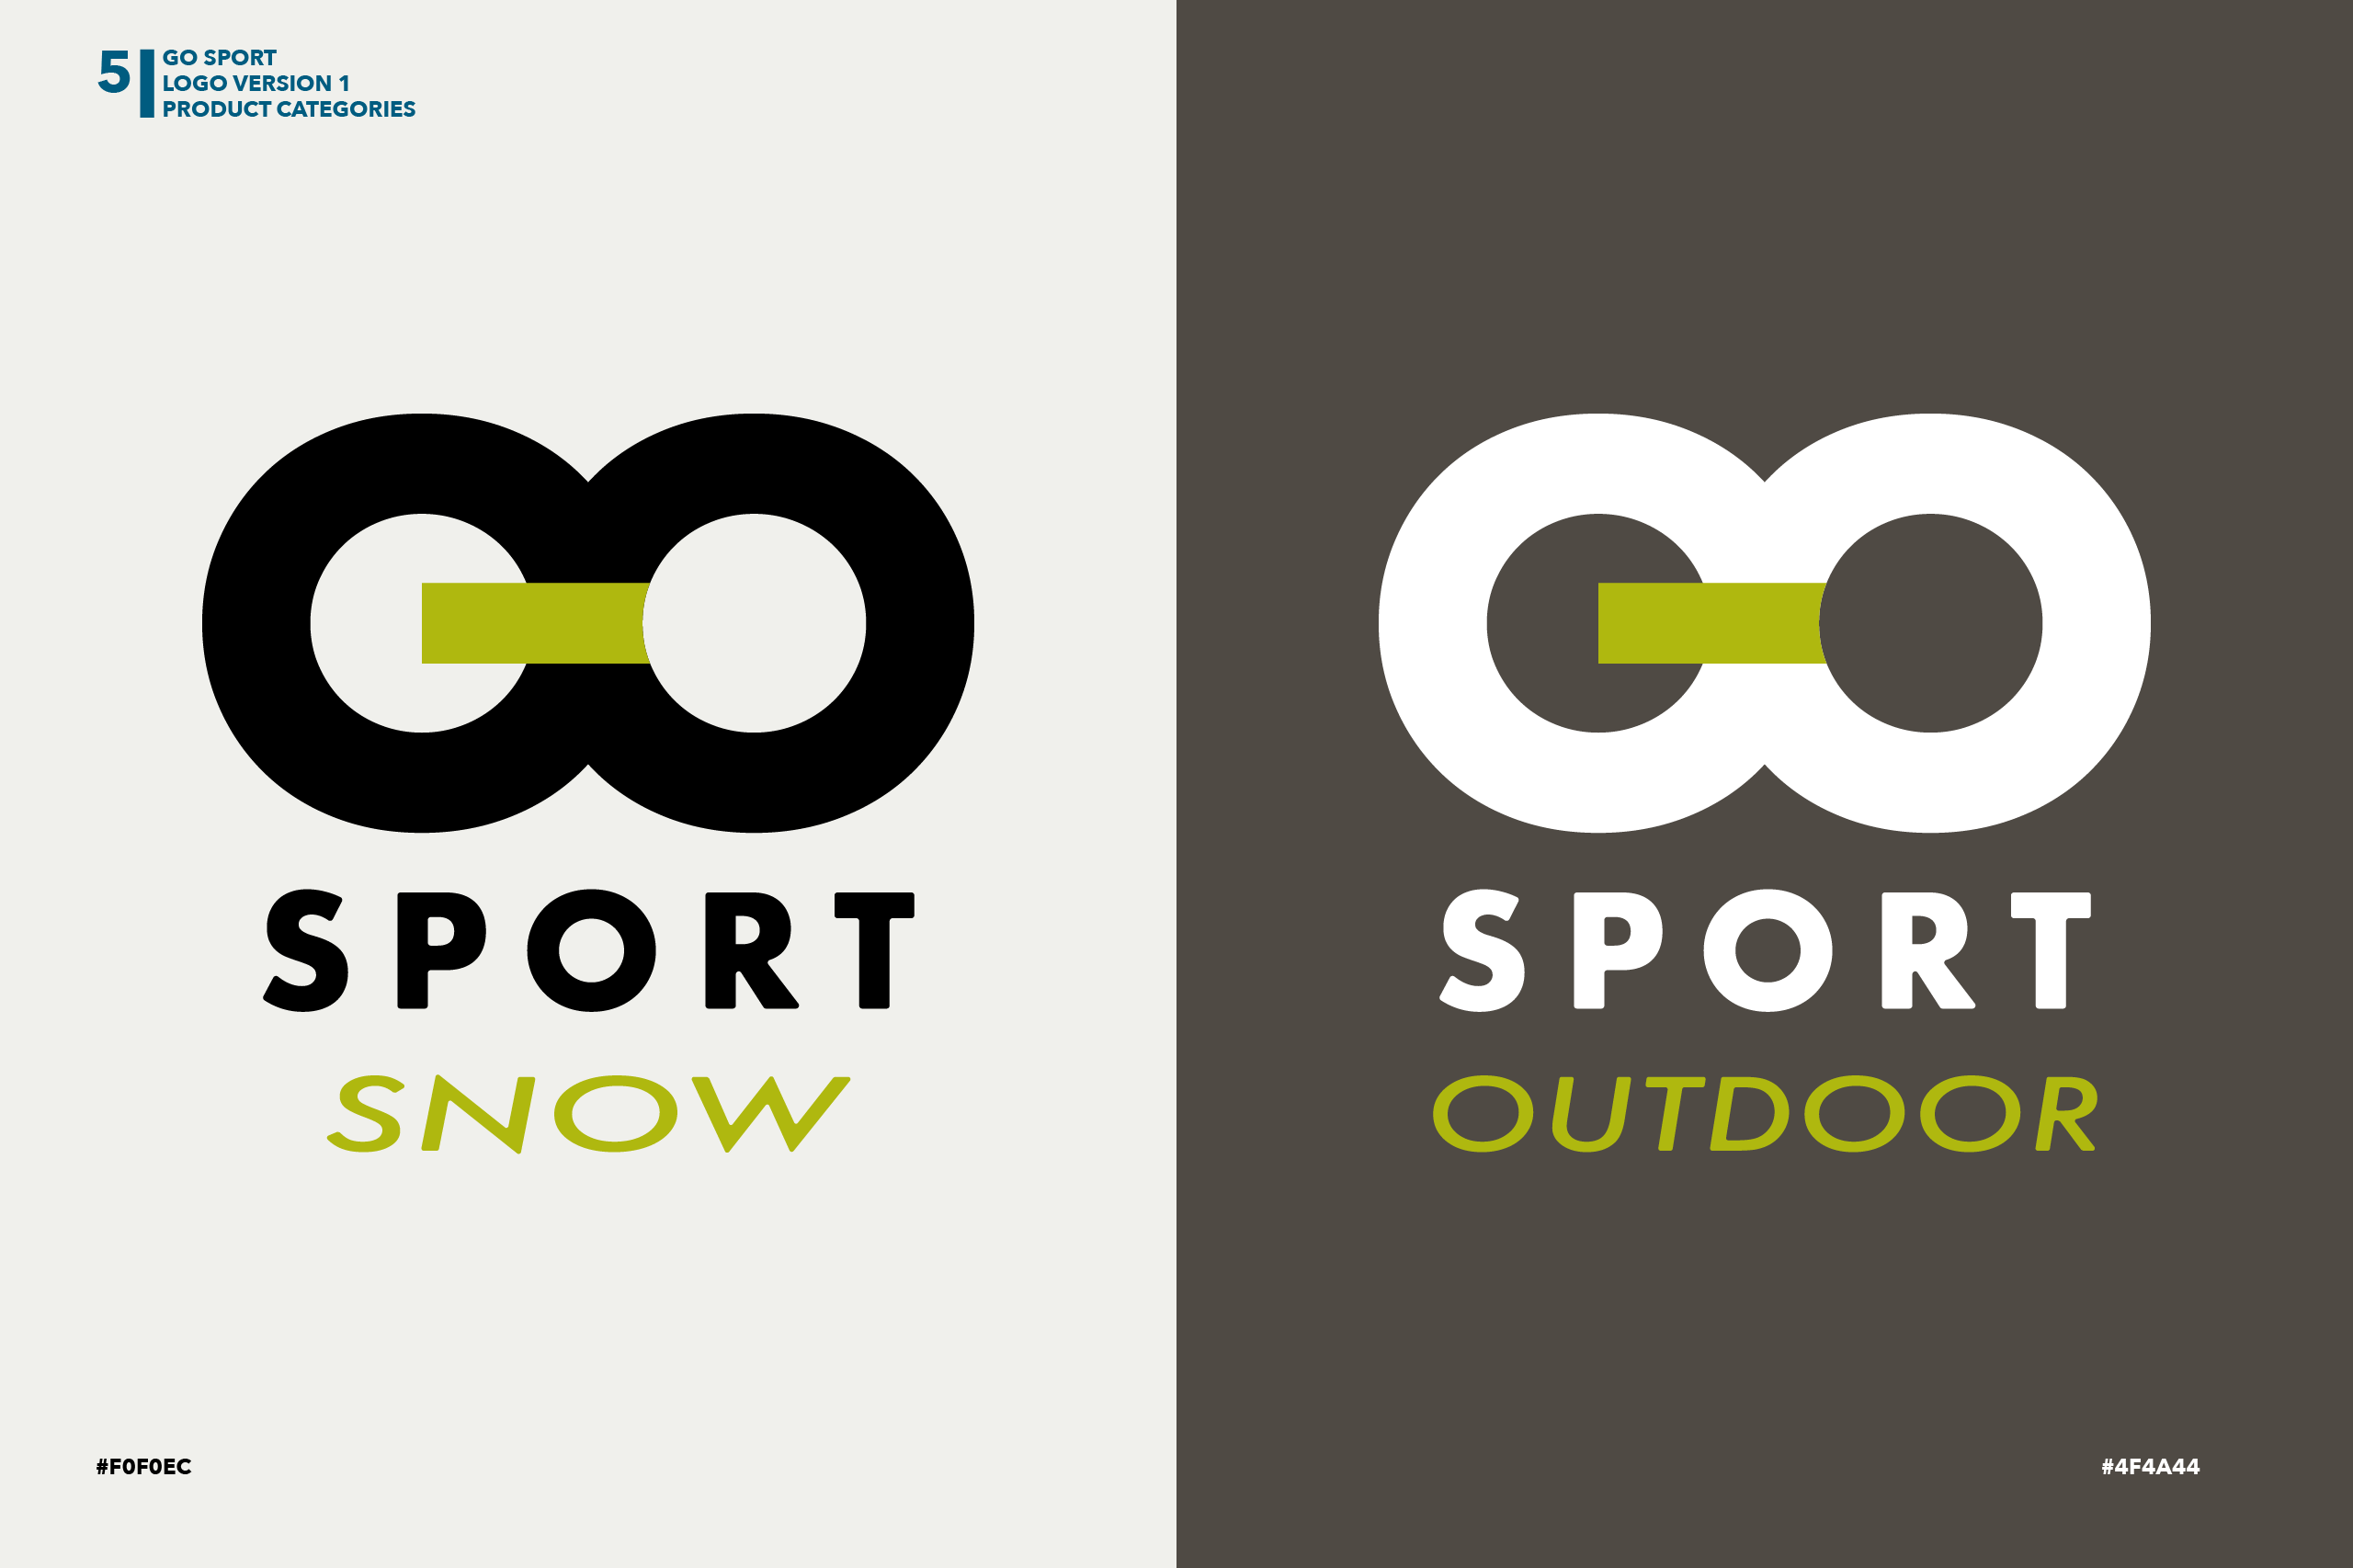 Go Sport logo redesign proposal by Xavier Wendling